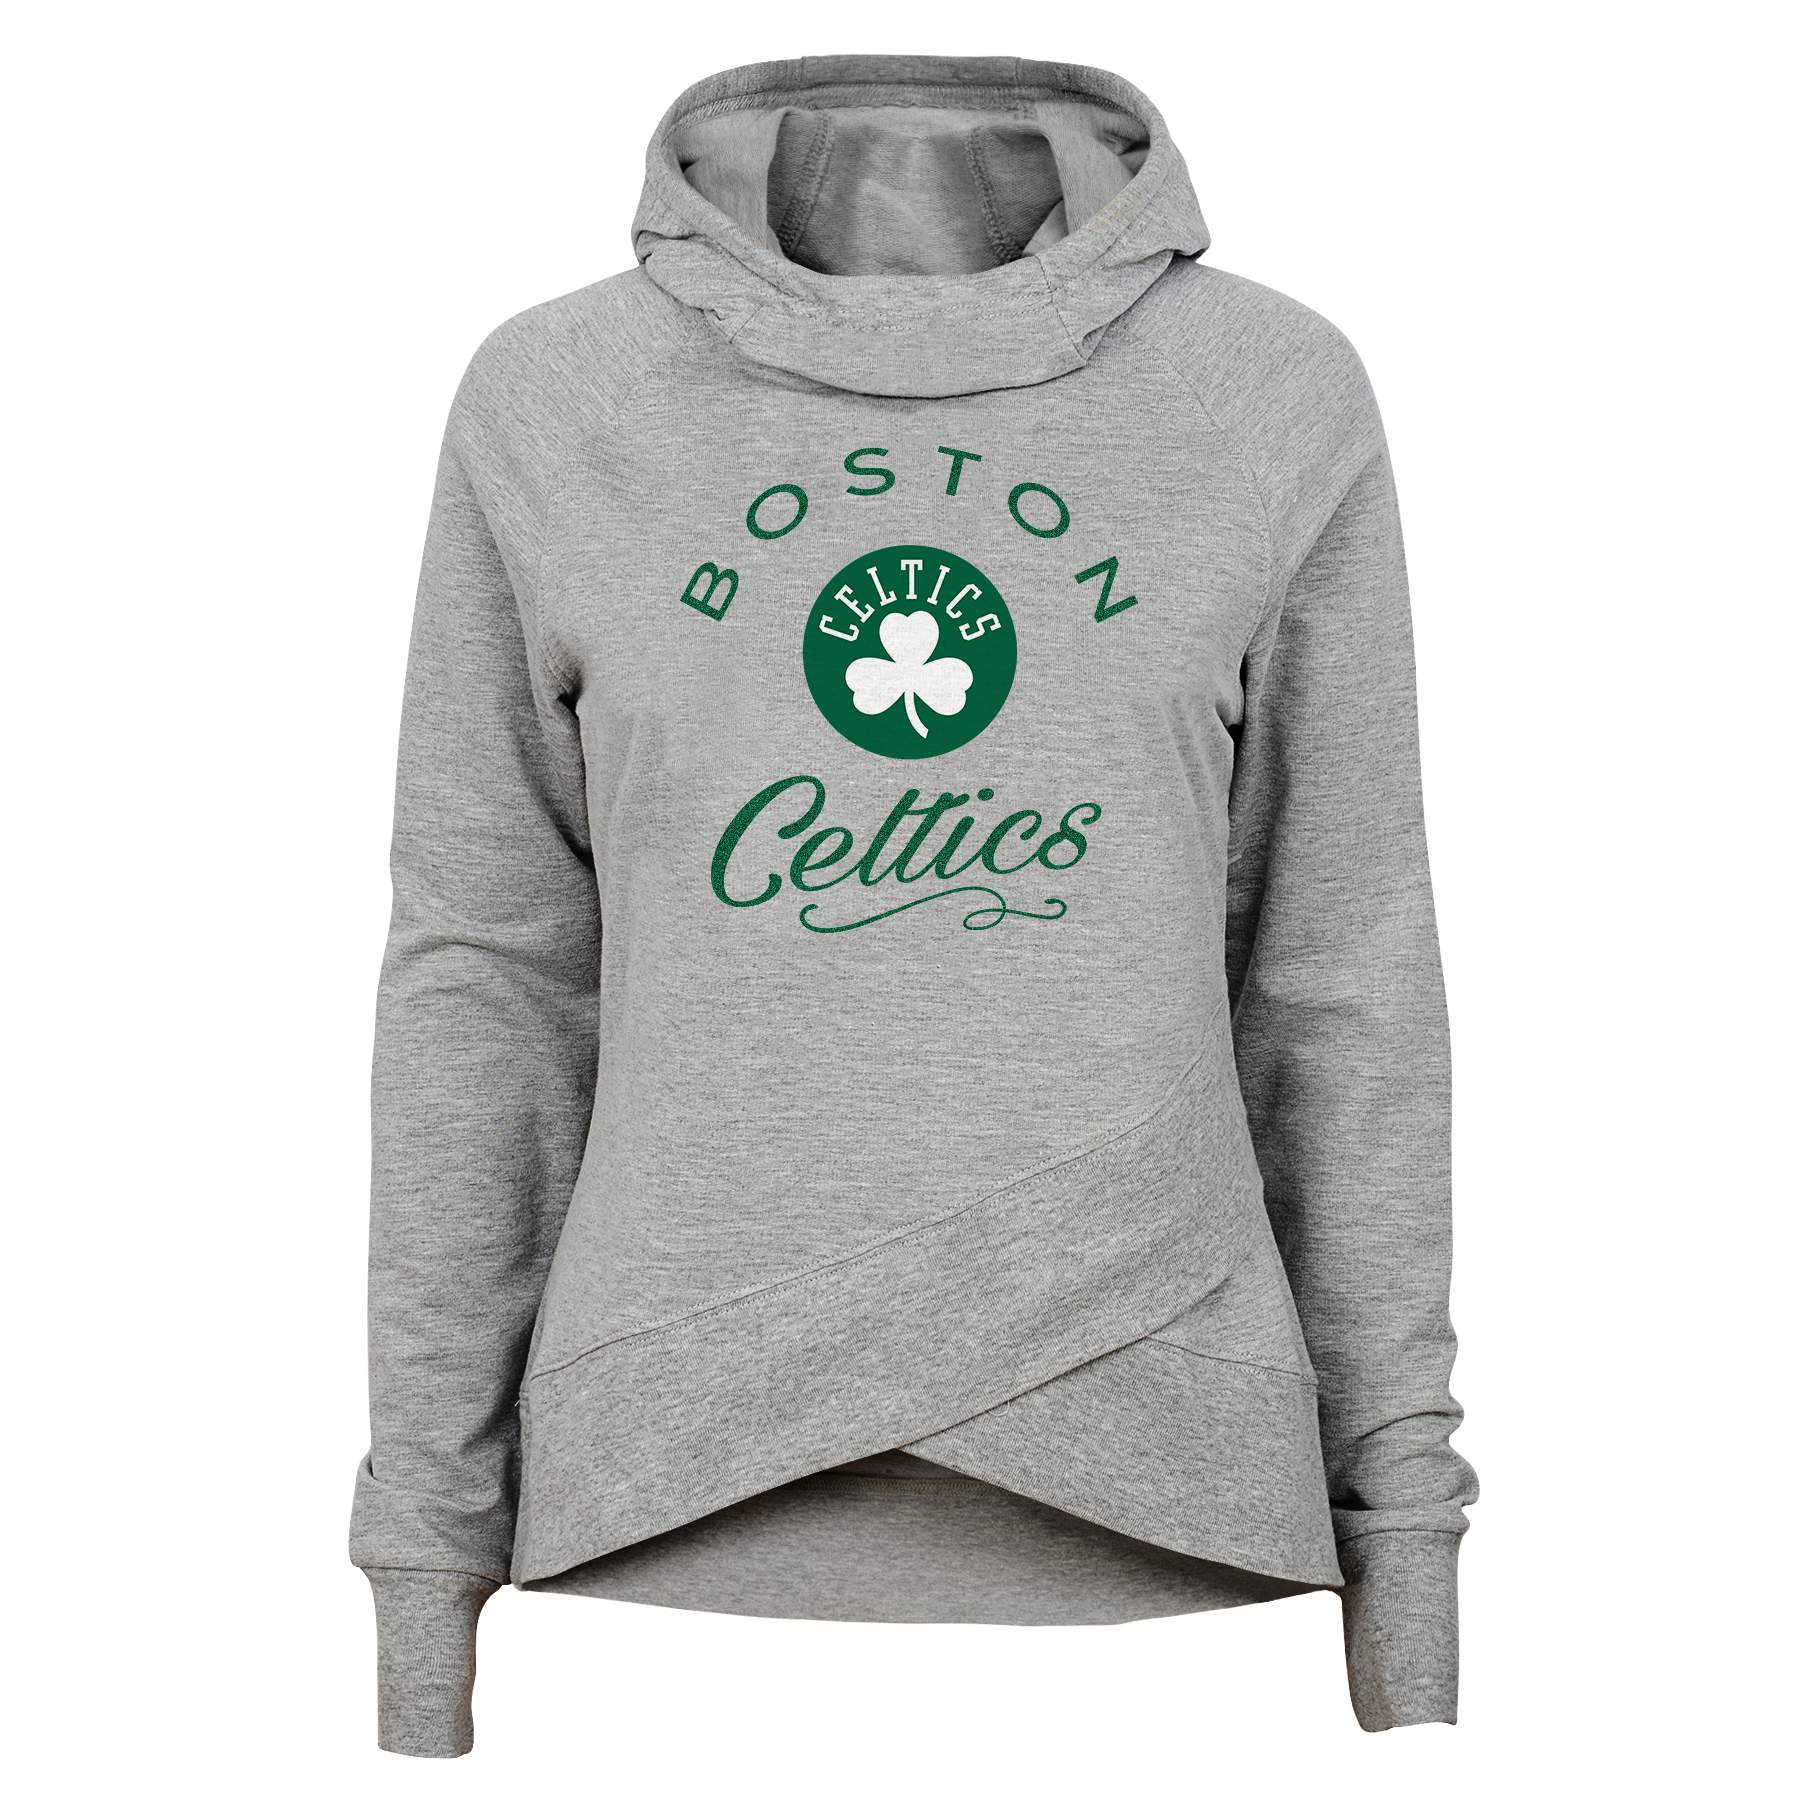 celtics sweatshirt